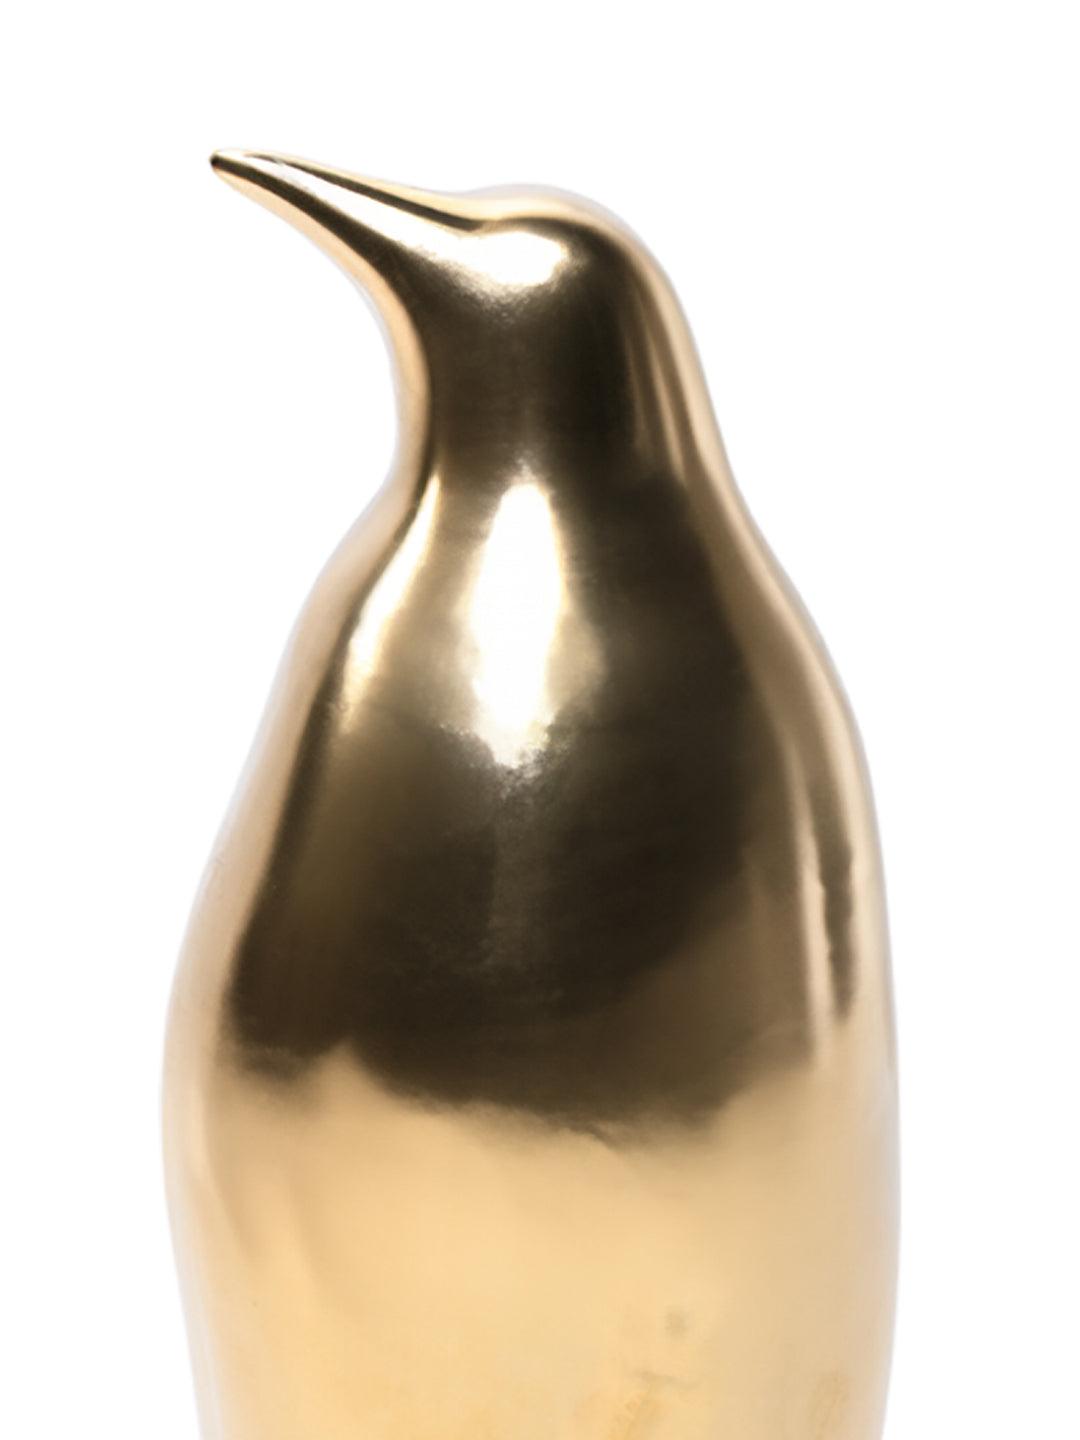 Golden Penguin Statue Figurine